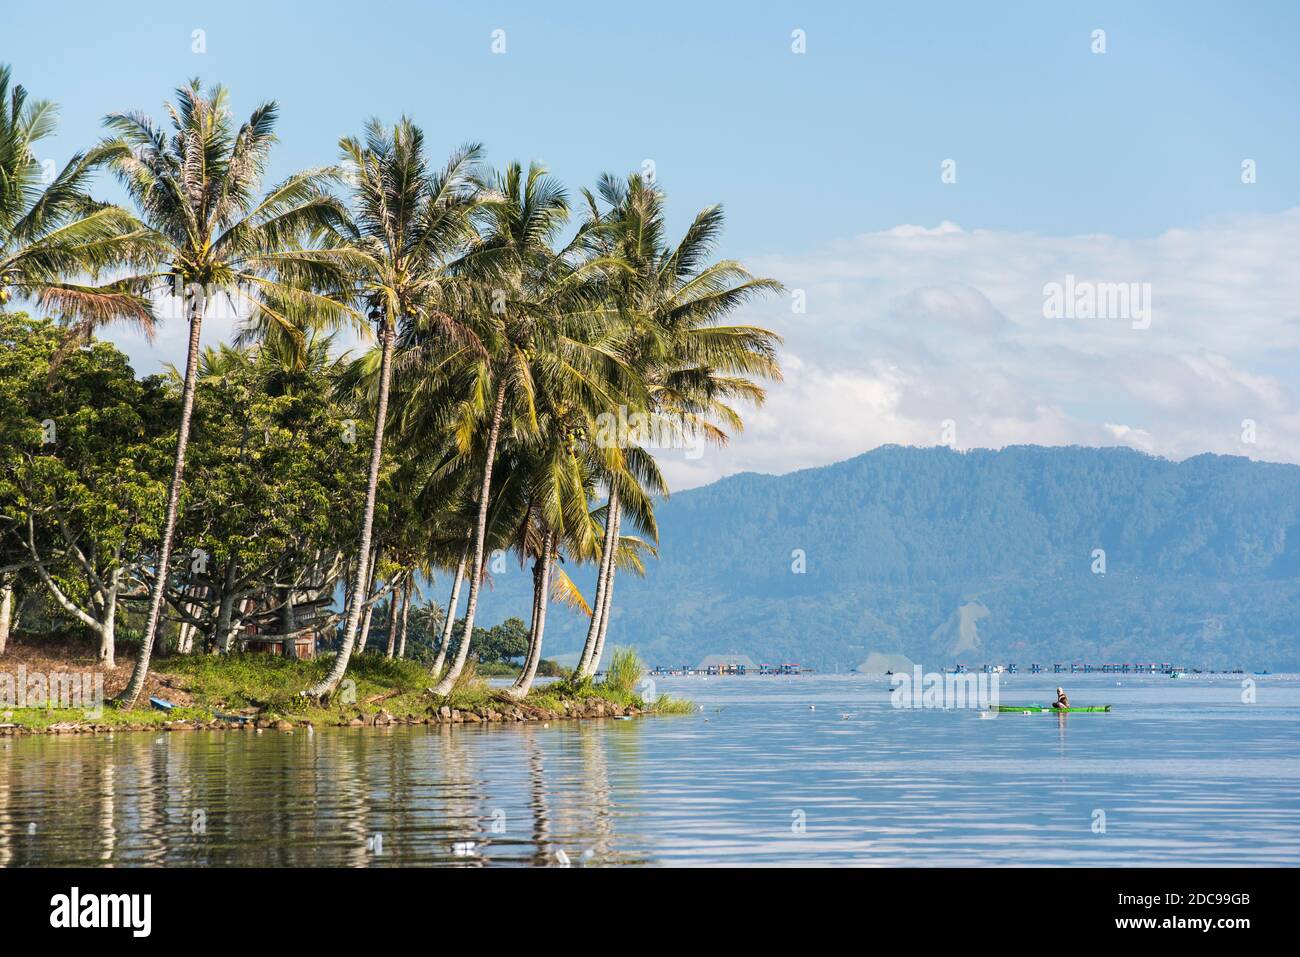 Fisherman and palm trees, Lake Toba (Danau Toba), North Sumatra, Indonesia, Asia Stock Photo